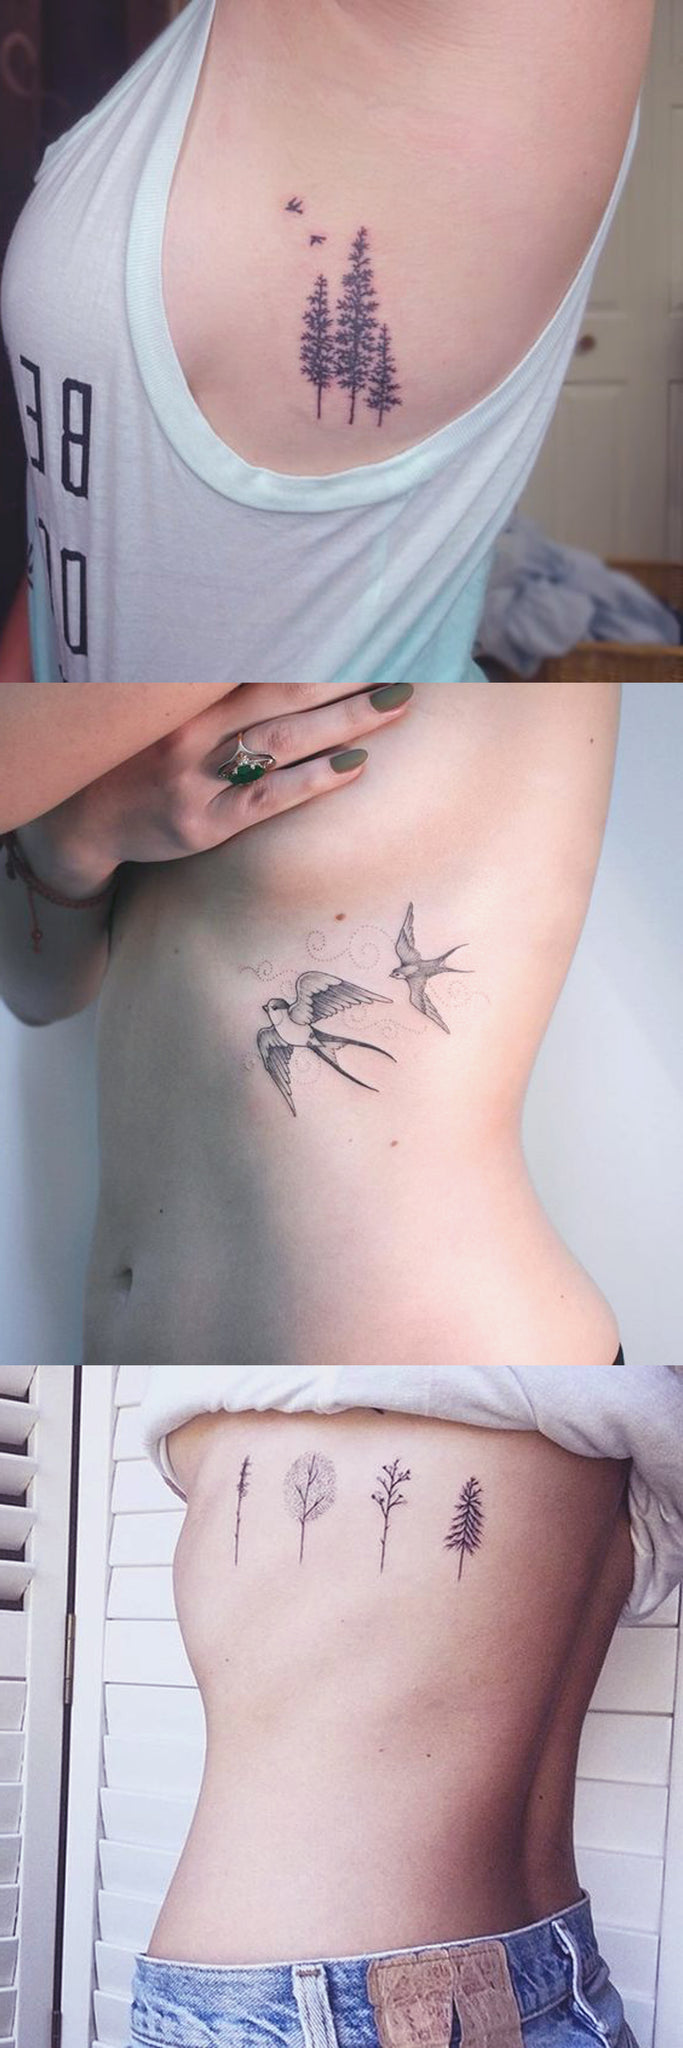 Small Nature Rib Tattoo Ideas for Women - Double Sparrow Bird idées de tatouage pour les femmes - Tree ideas de tatuajes para mujeres - www.MyBodiArt.com